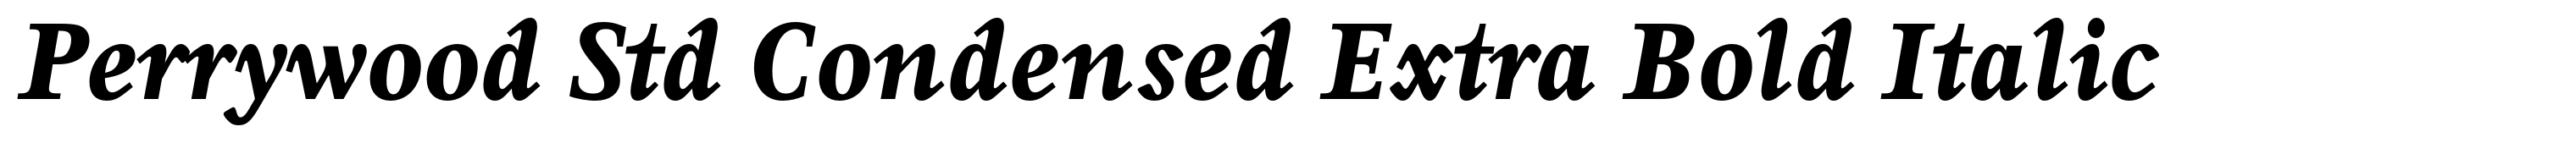 Perrywood Std Condensed Extra Bold Italic